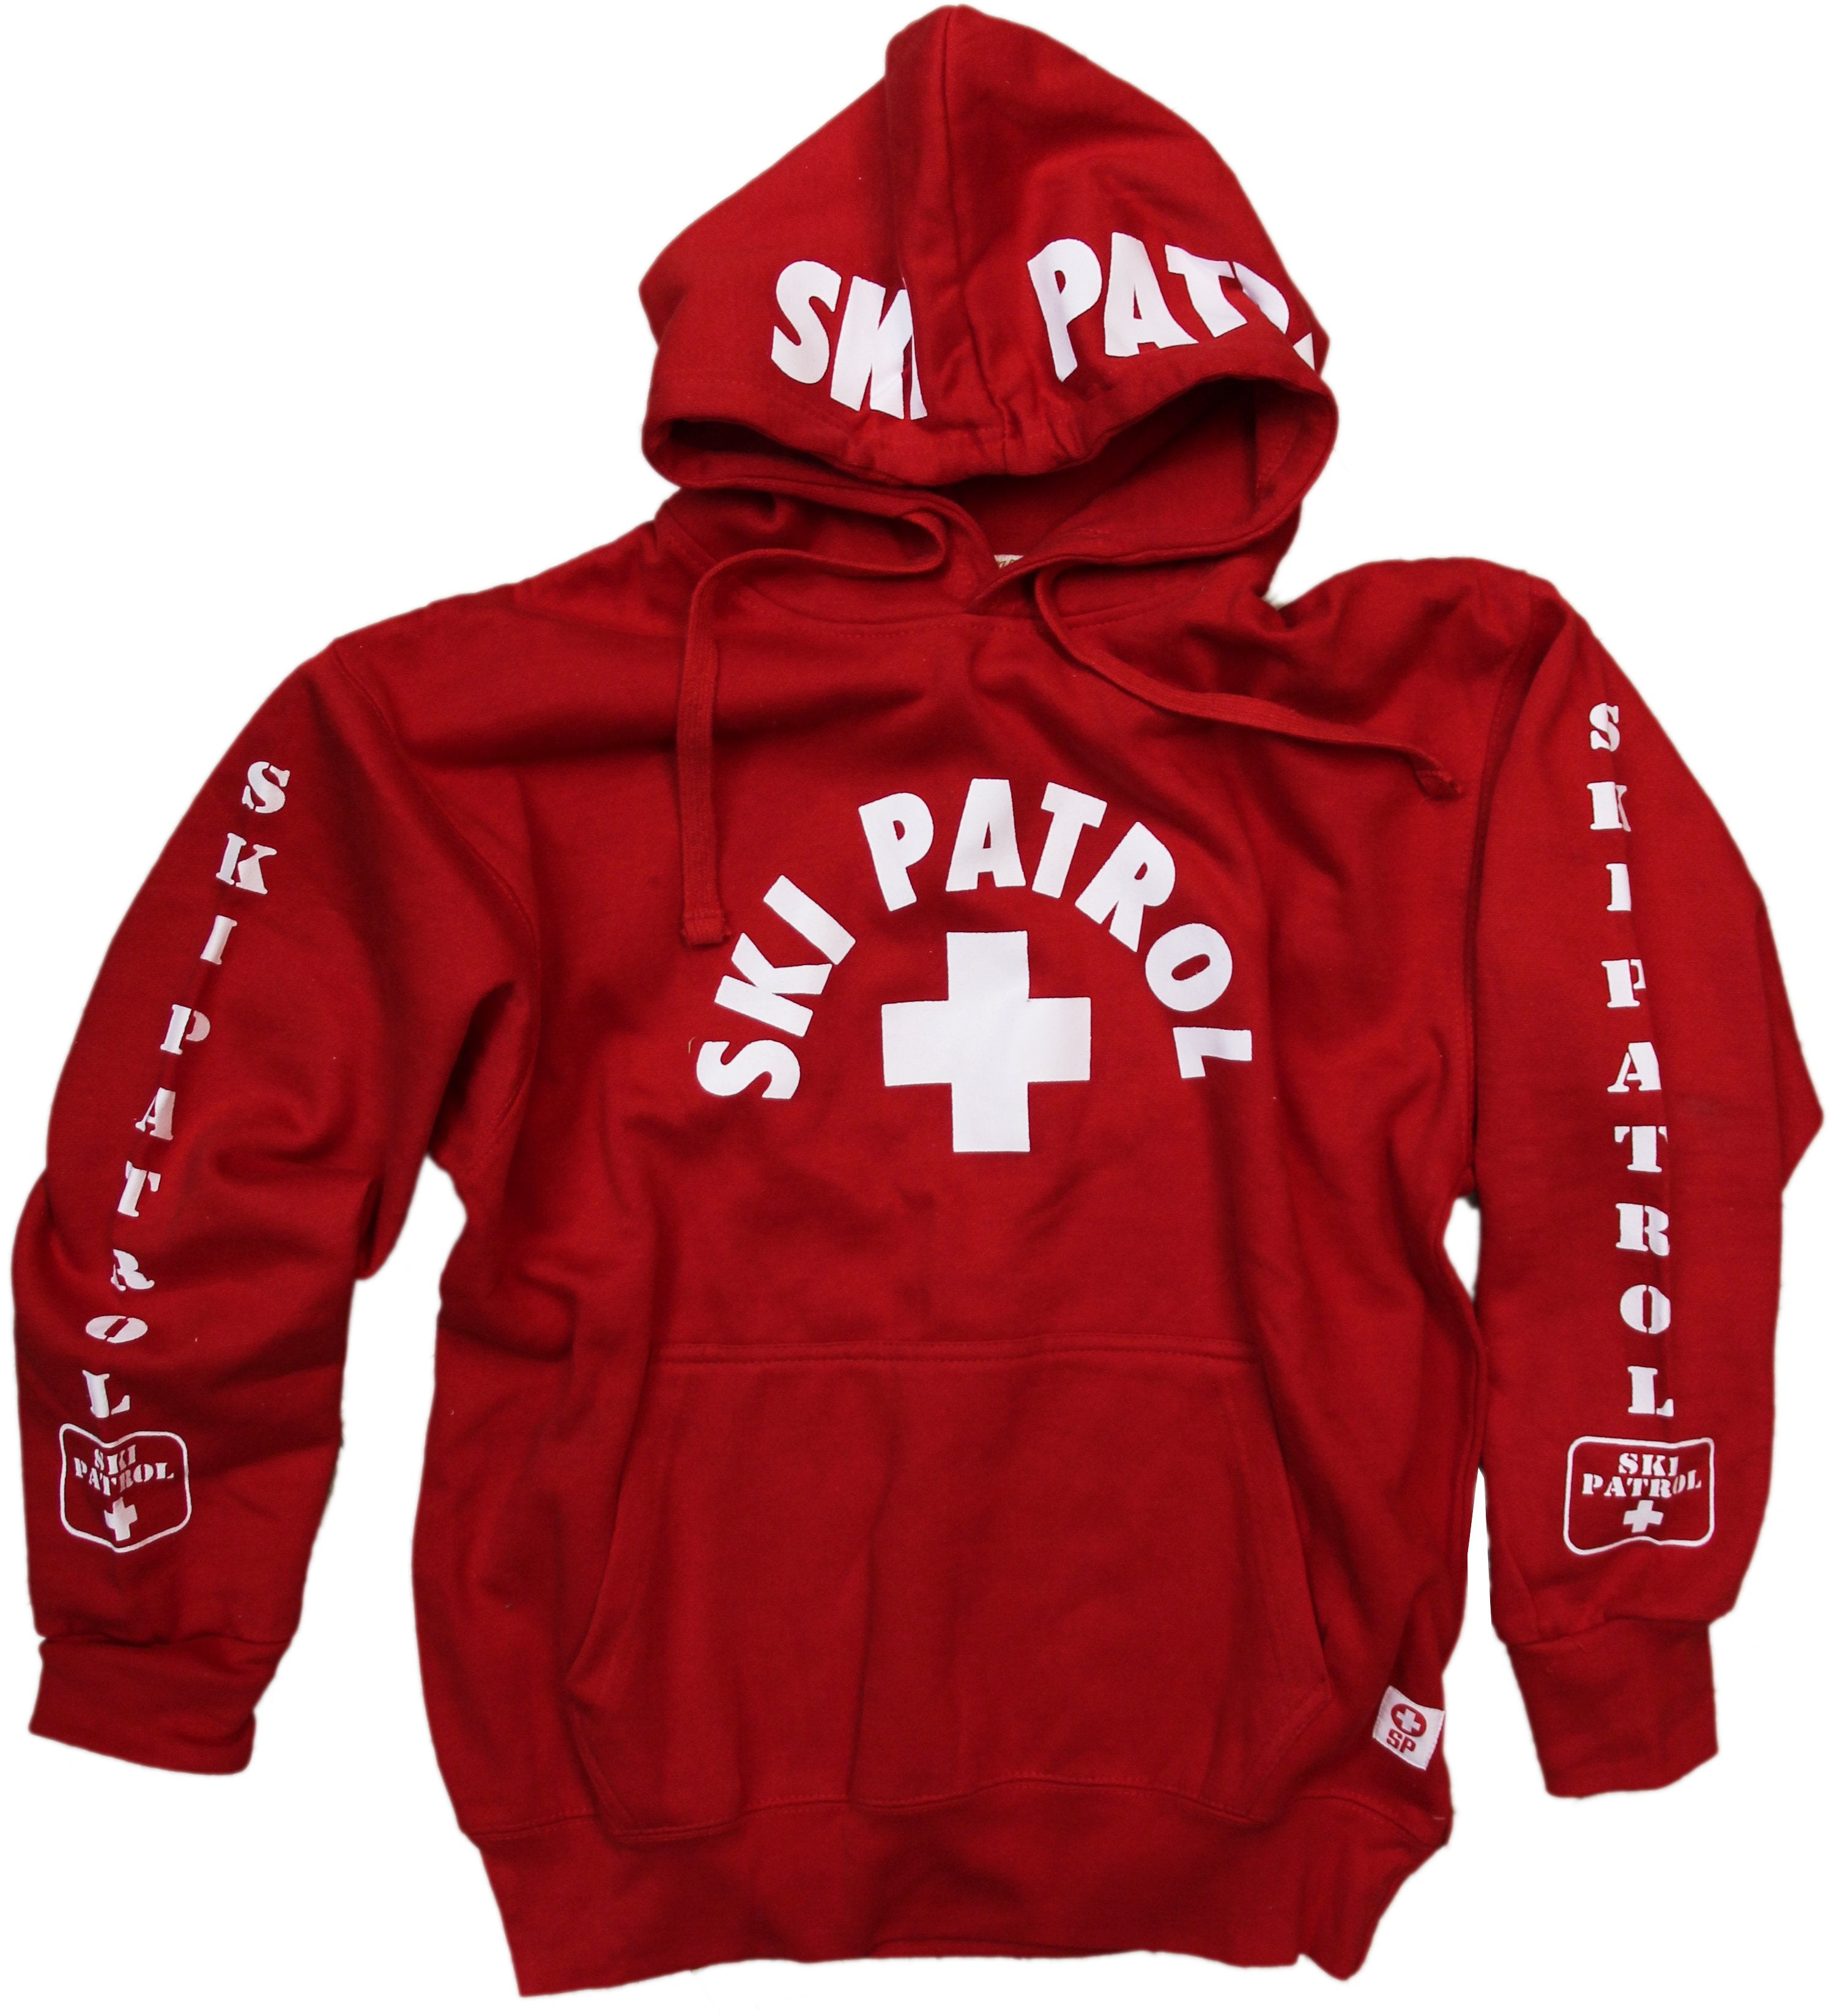 SKI PATROL Sweatshirt Sweat à capuche rouge Guard Patrol Shirt Gift Red White Ski Coat